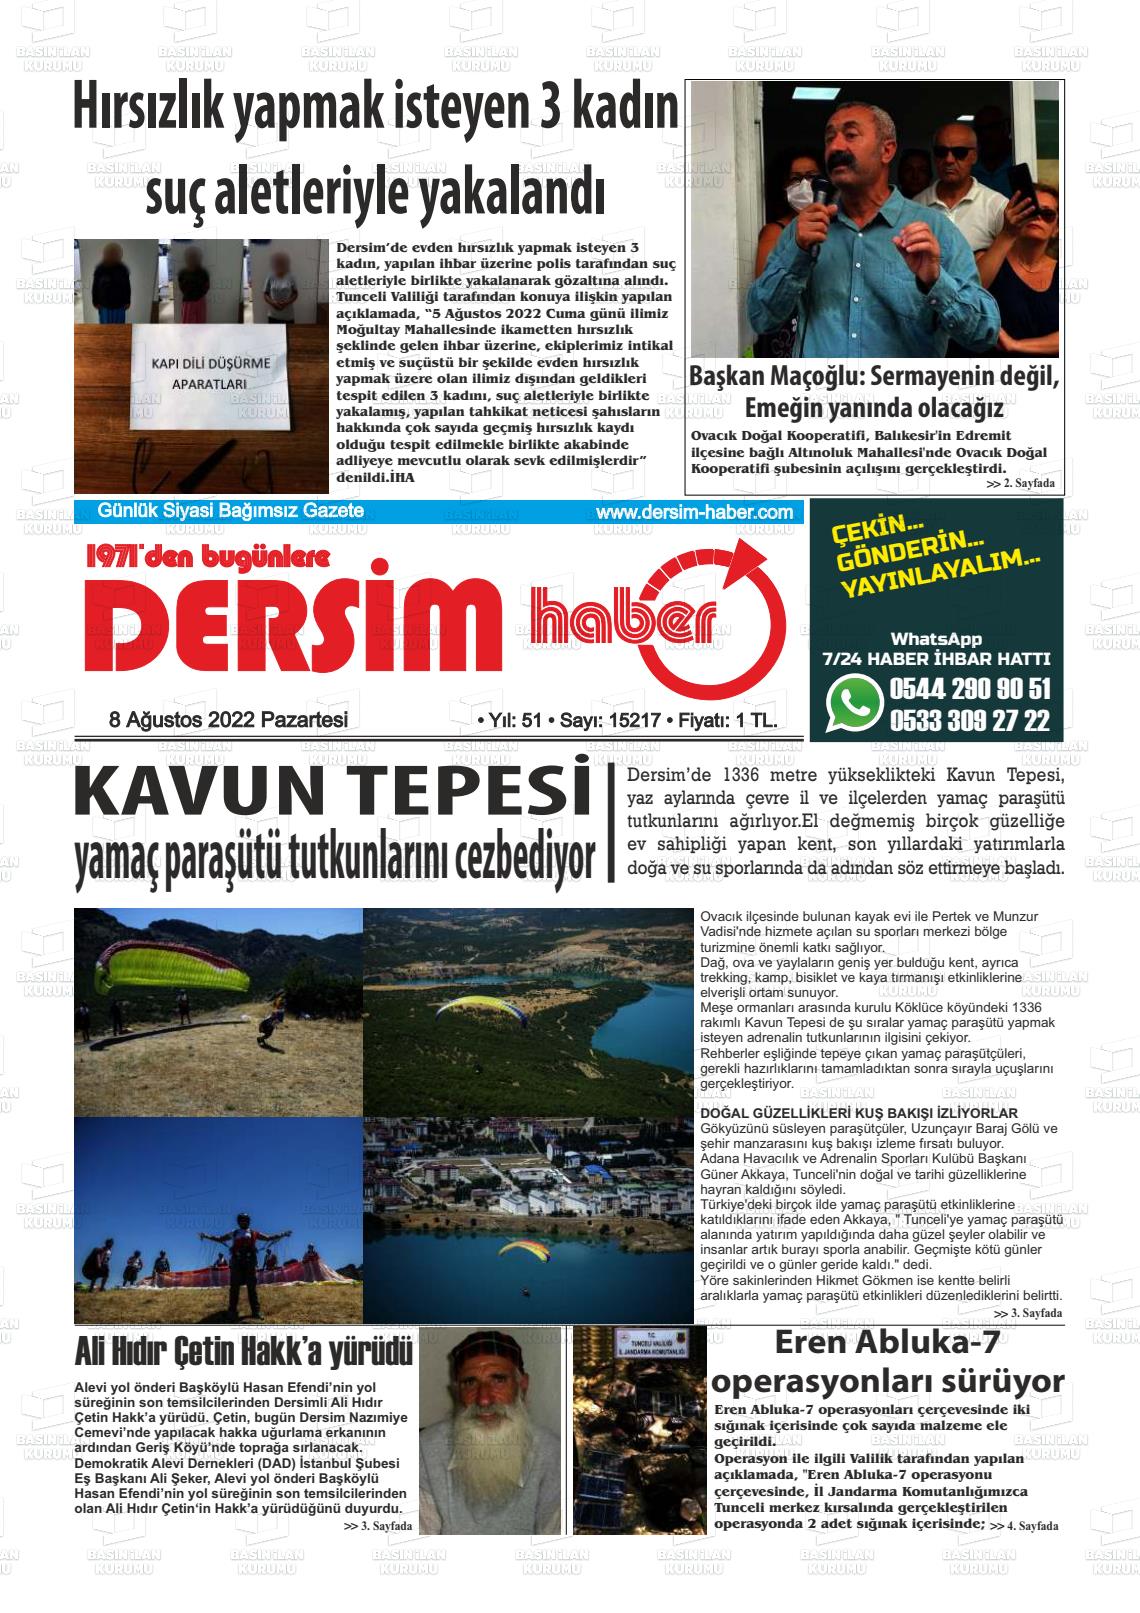 08 Ağustos 2022 DERSİM HABER Gazete Manşeti